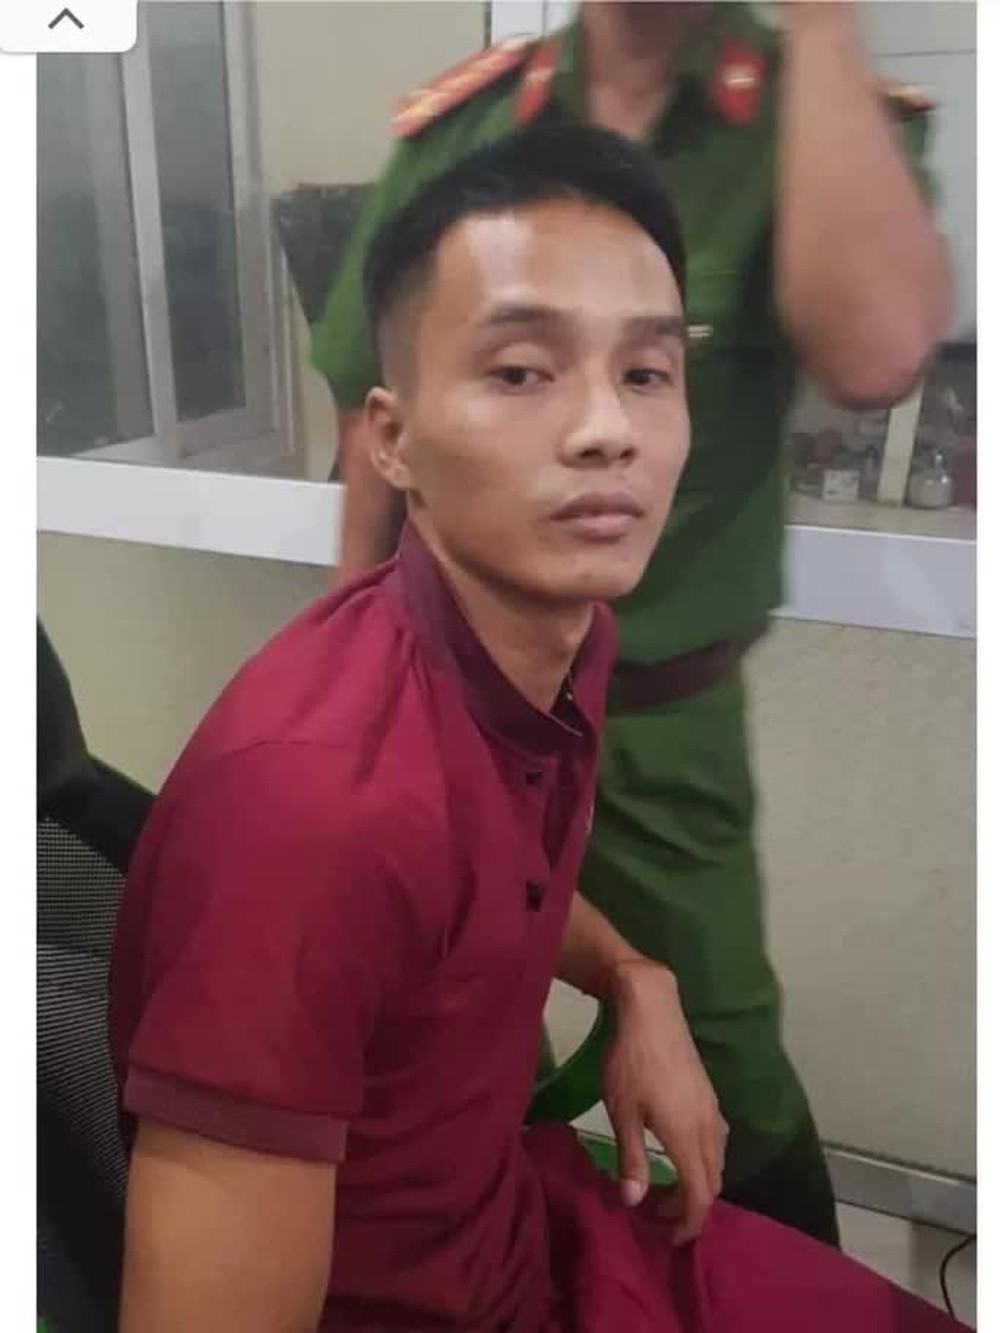 Trieu Quan escaped from prison again - Photo 1.